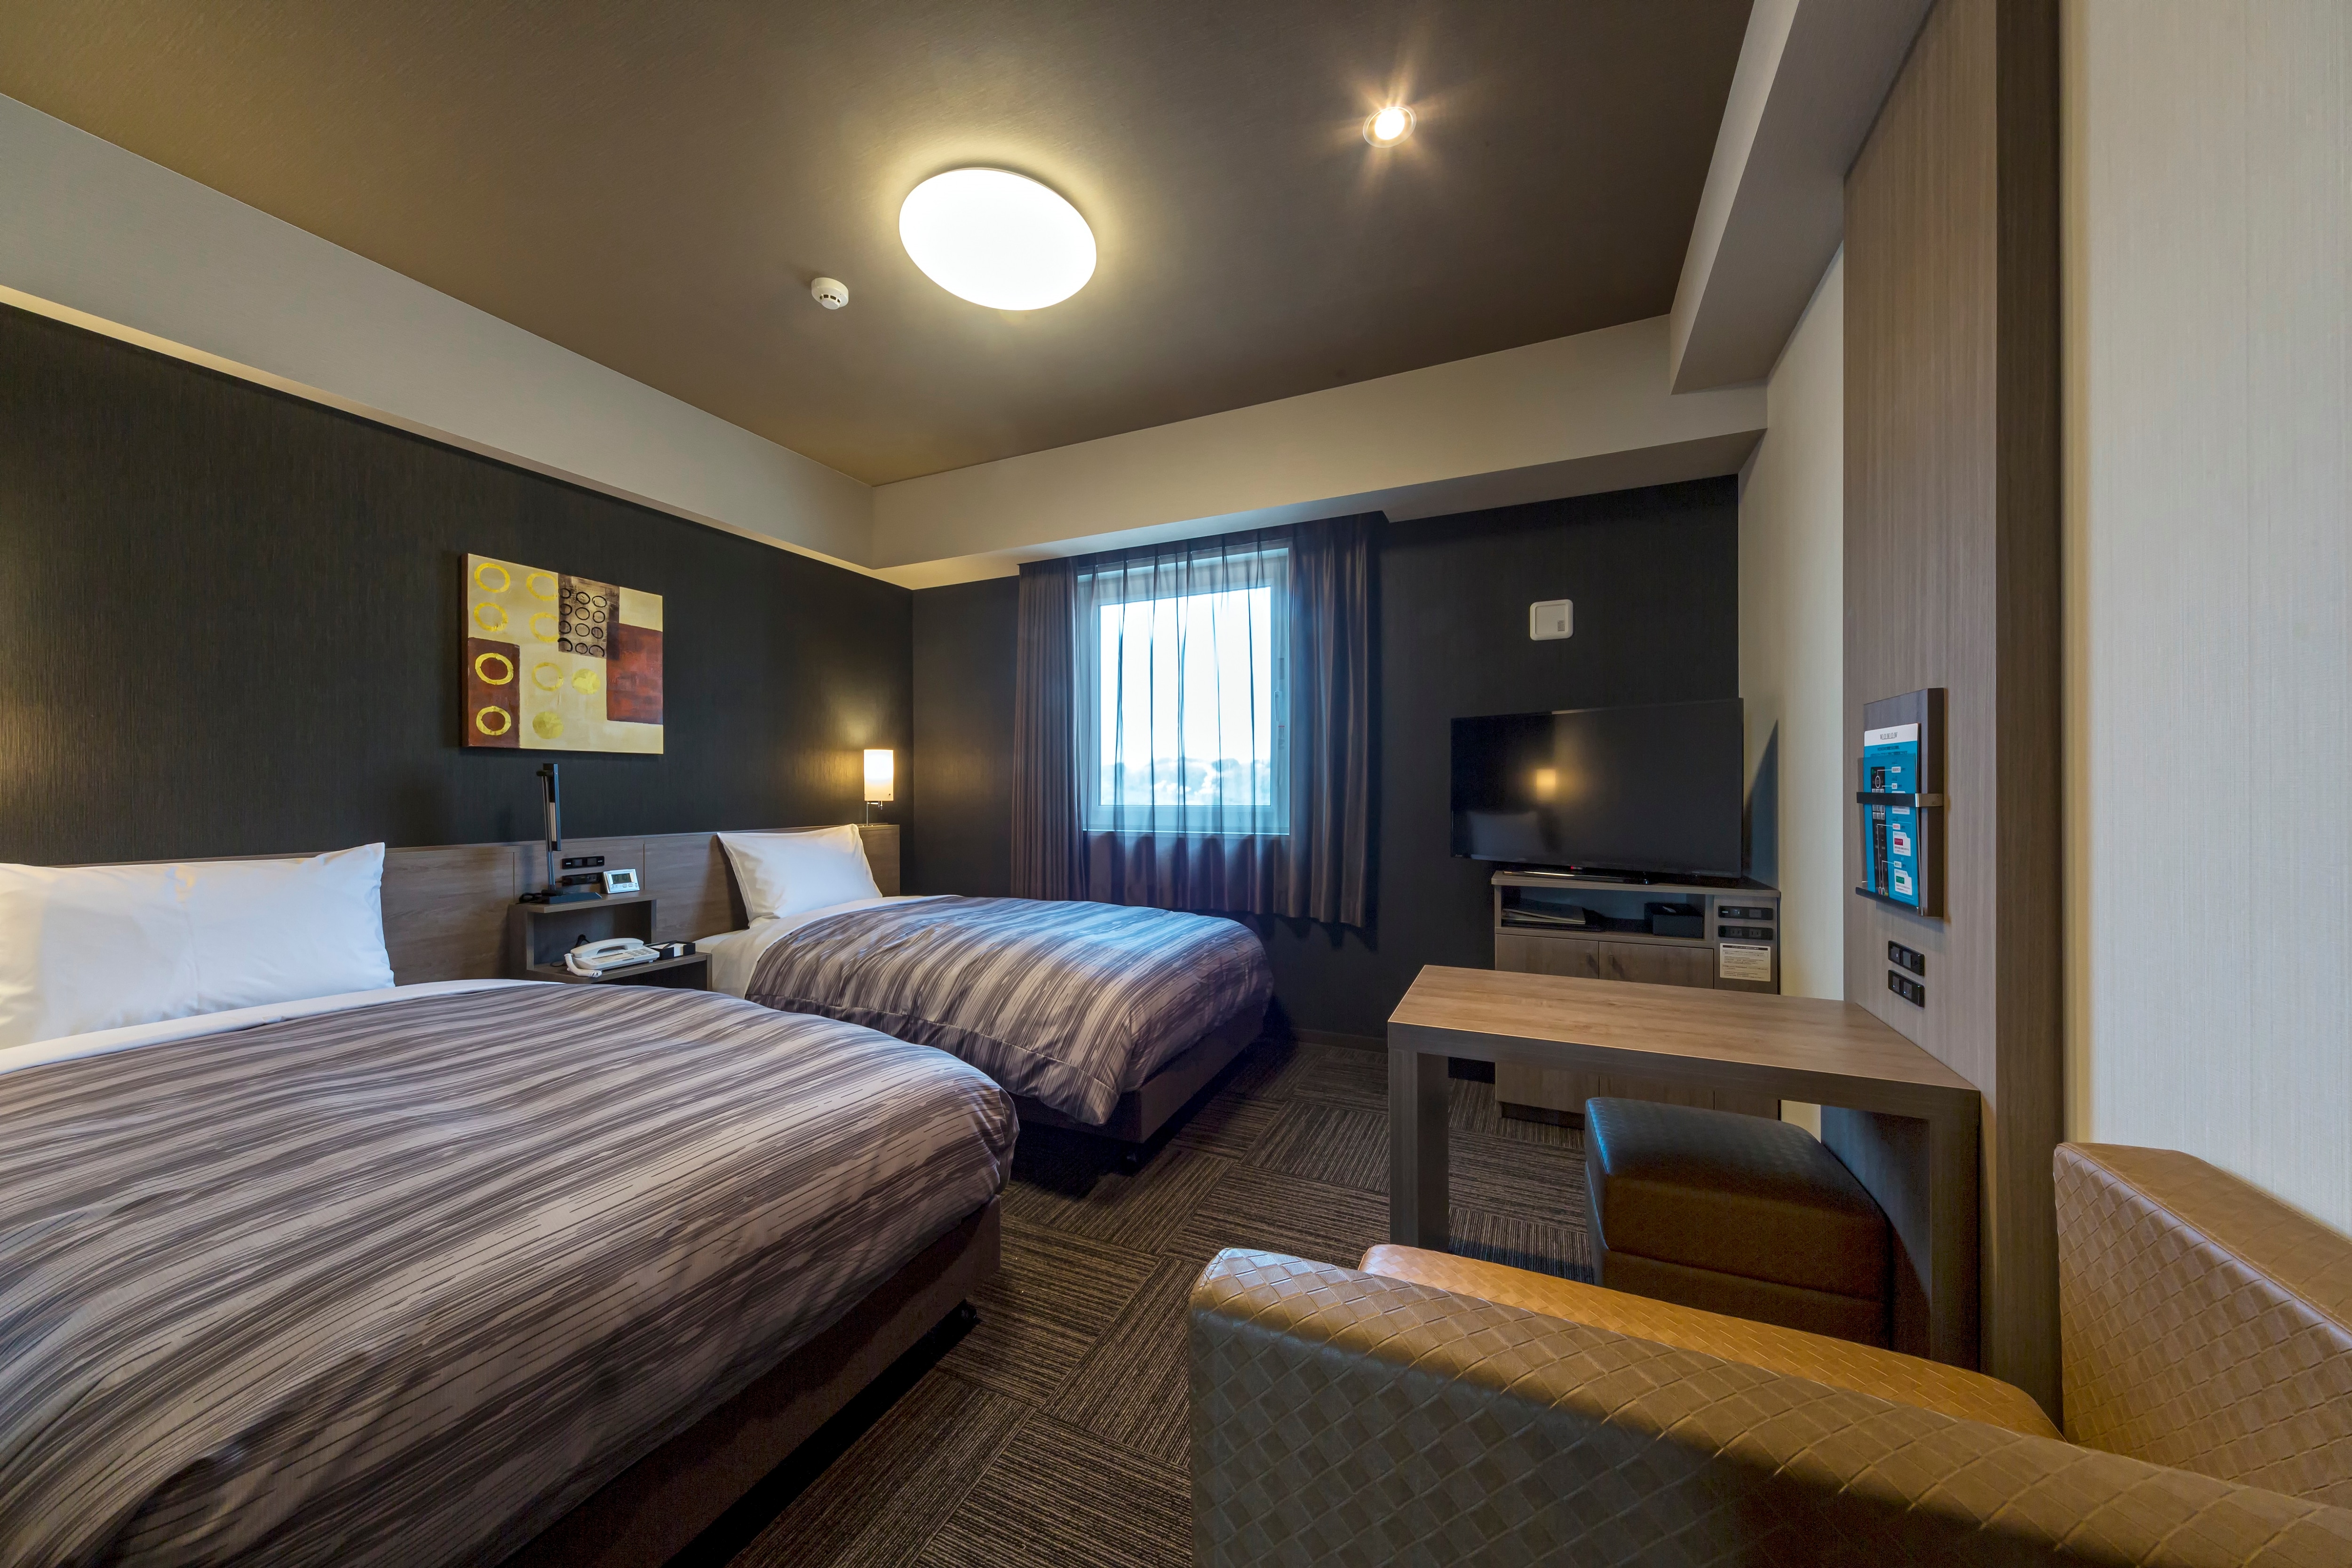 [Guest room] Standard twin room 19 square meters, bed width 110 cm